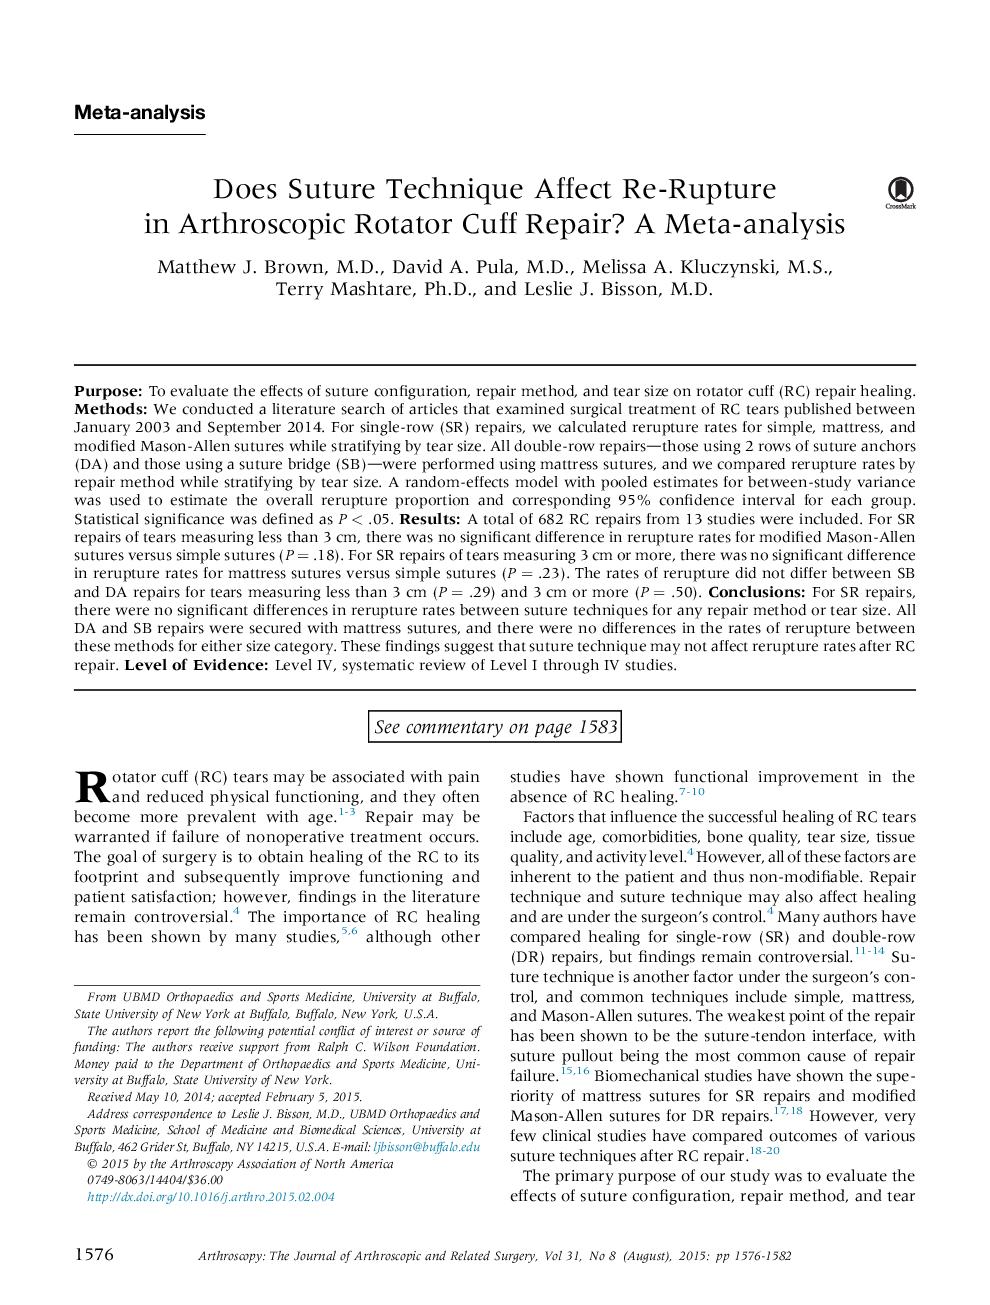 Does Suture Technique Affect Re-Rupture in Arthroscopic Rotator Cuff Repair? A Meta-analysis 